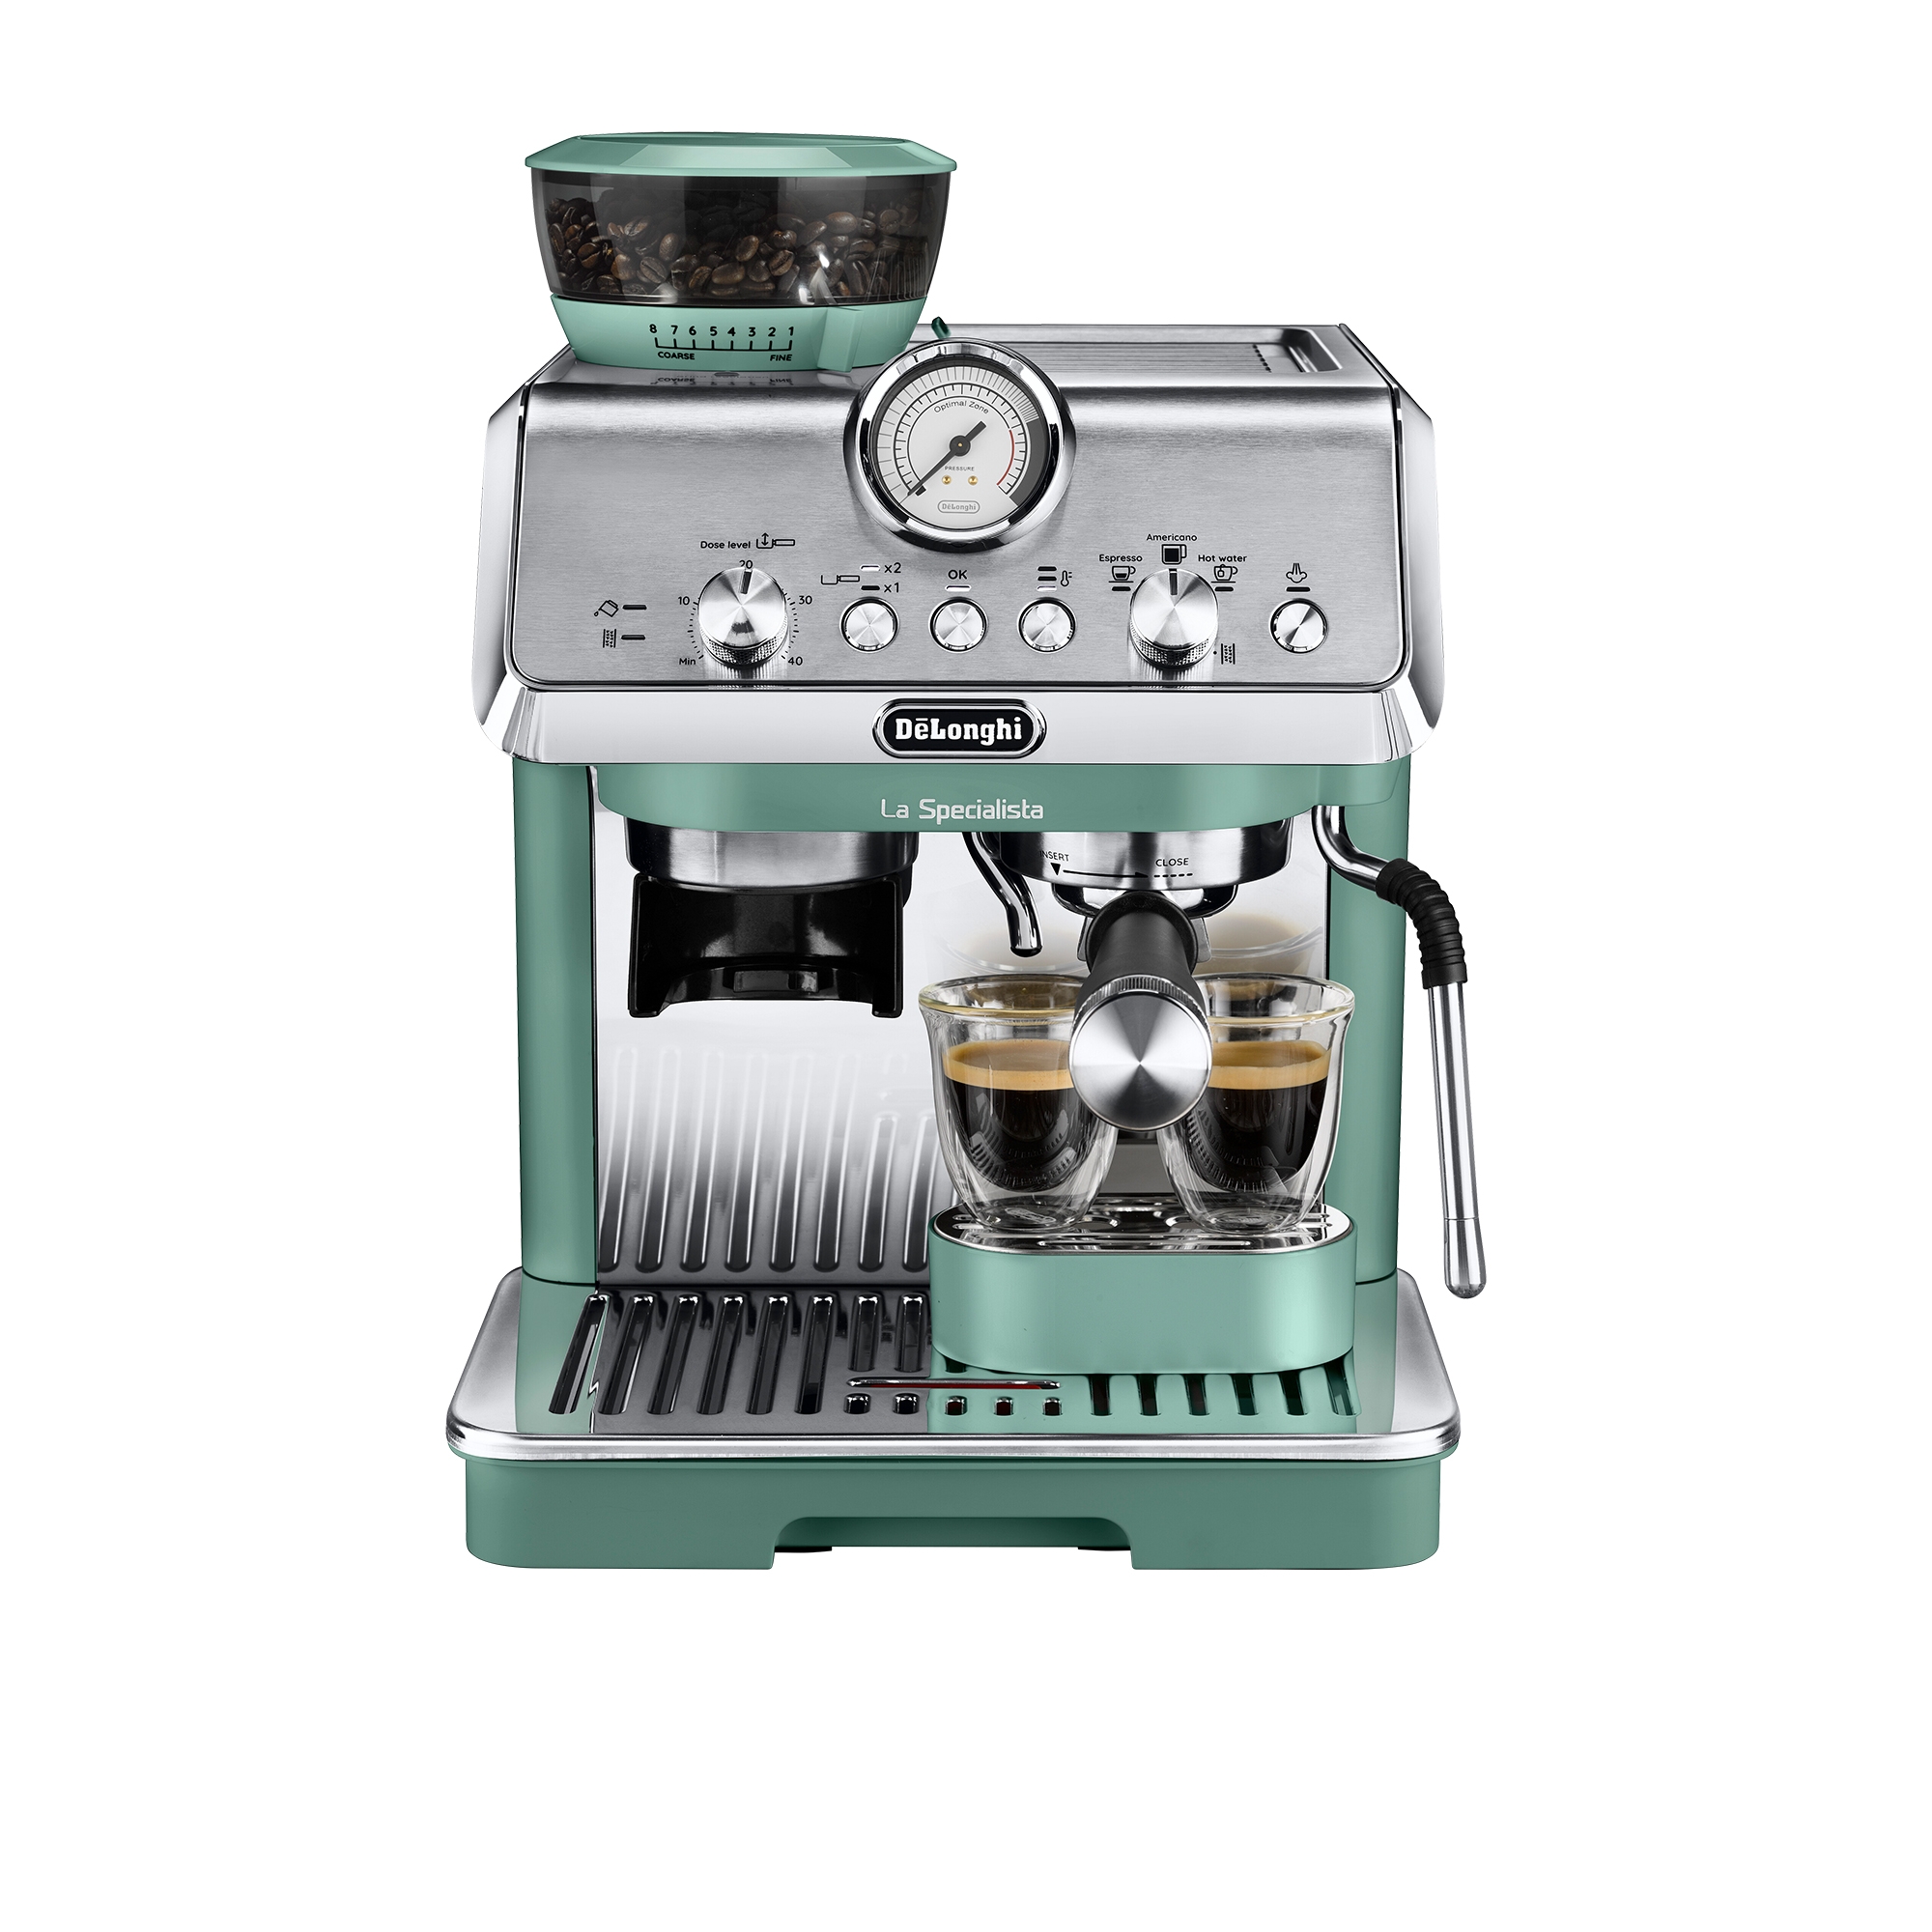 DeLonghi La Specialista Arte EC9155GR Espresso Coffee Machine Toronto Green Image 1